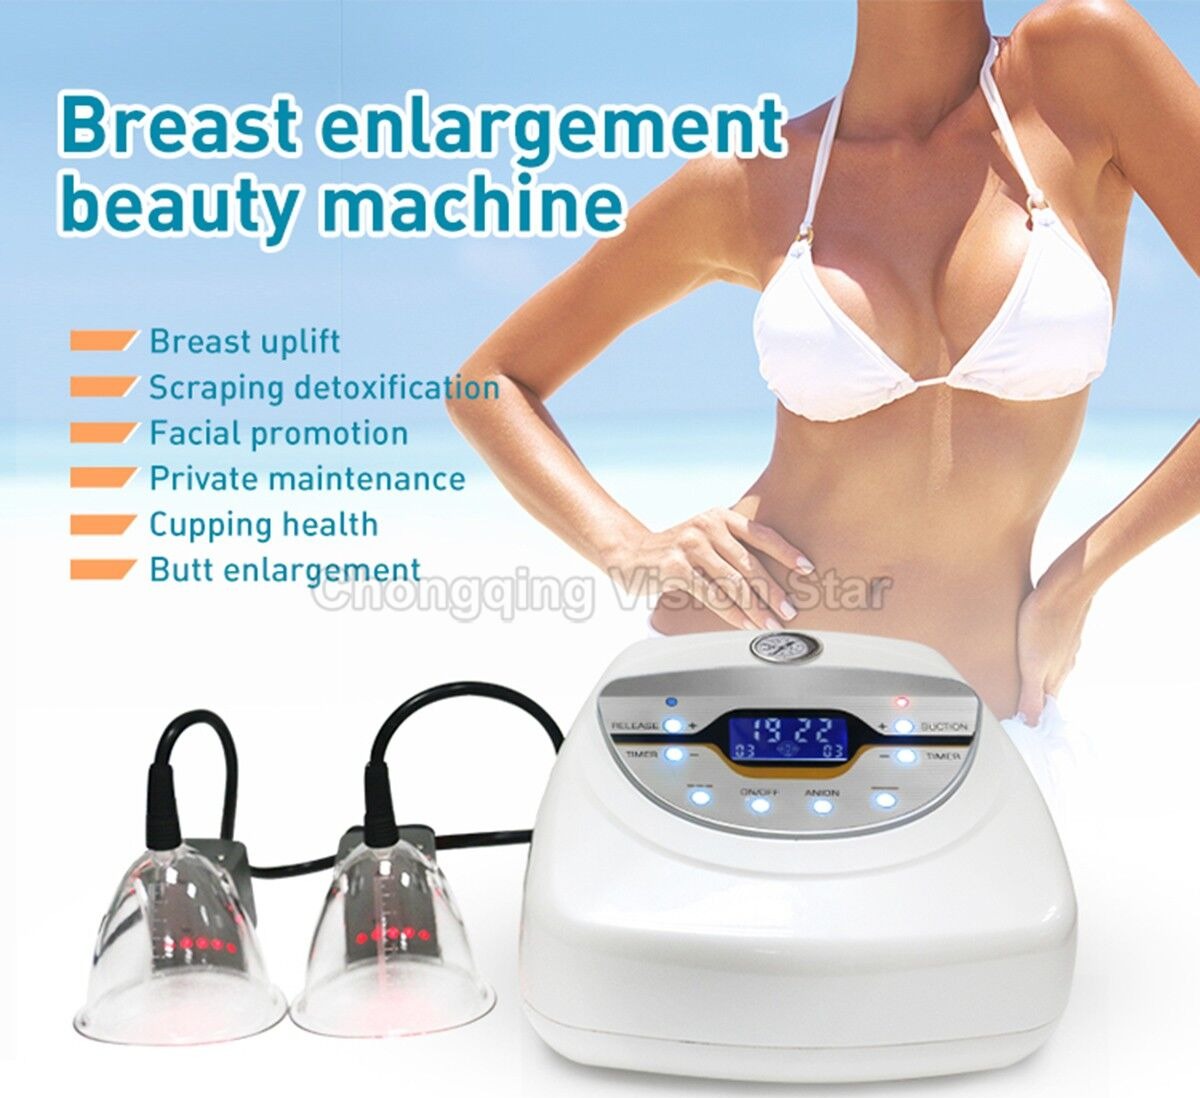 HYB-za-x111 Breast Enlargement Beauty Machine